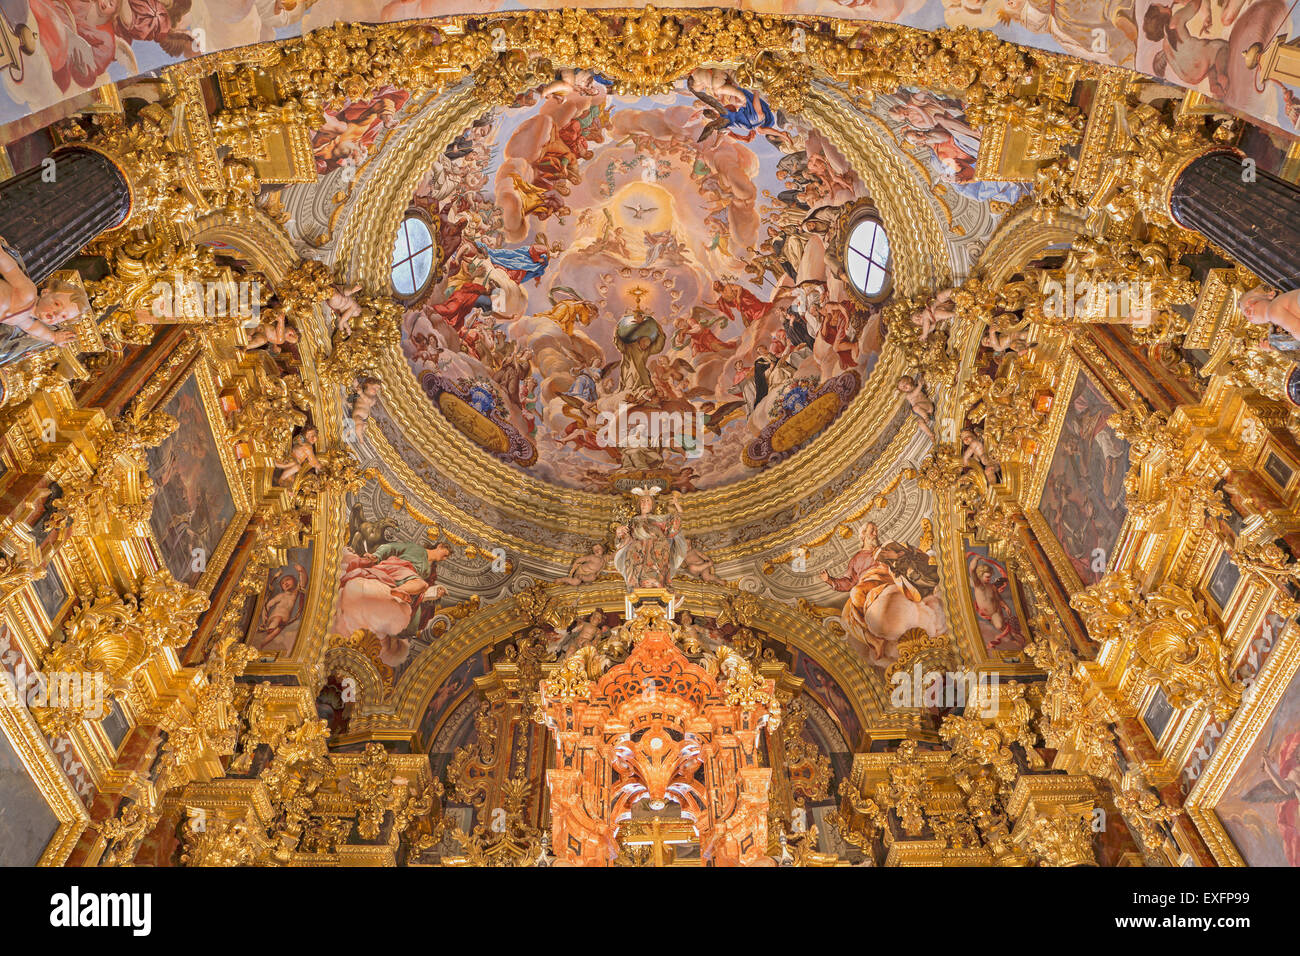 GRANADA, Spagna - 31 Maggio 2015: santuario barocco (Sancta Sanctorum) nella chiesa Monasterio de la Cartuja con un affresco di San Foto Stock